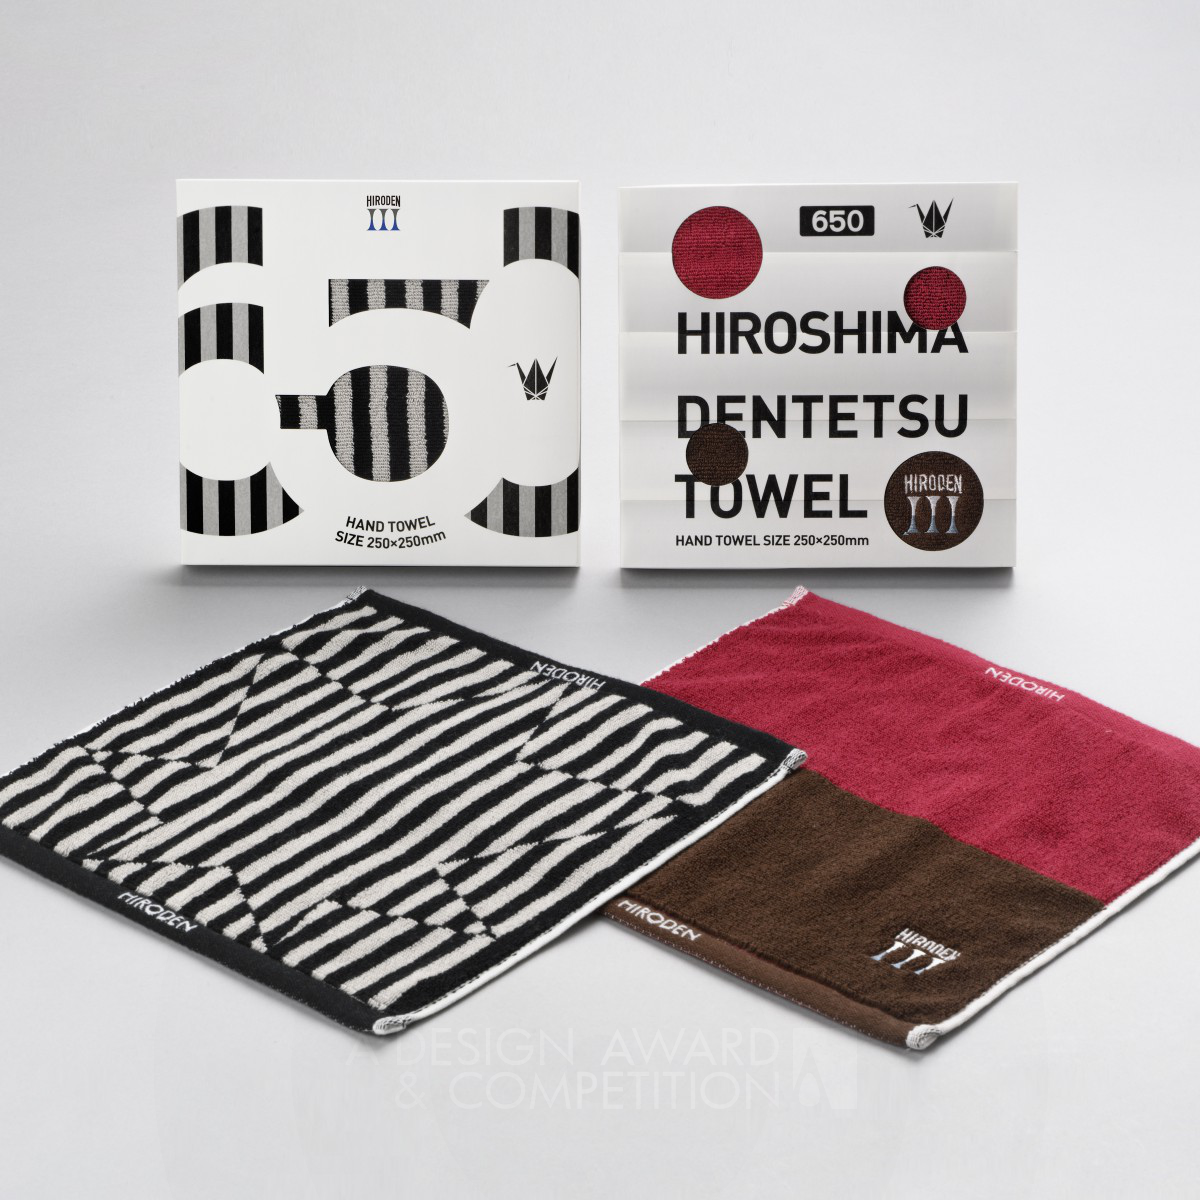 Hiroshima Dentetsu Hand Towel by Hajime Tsushima